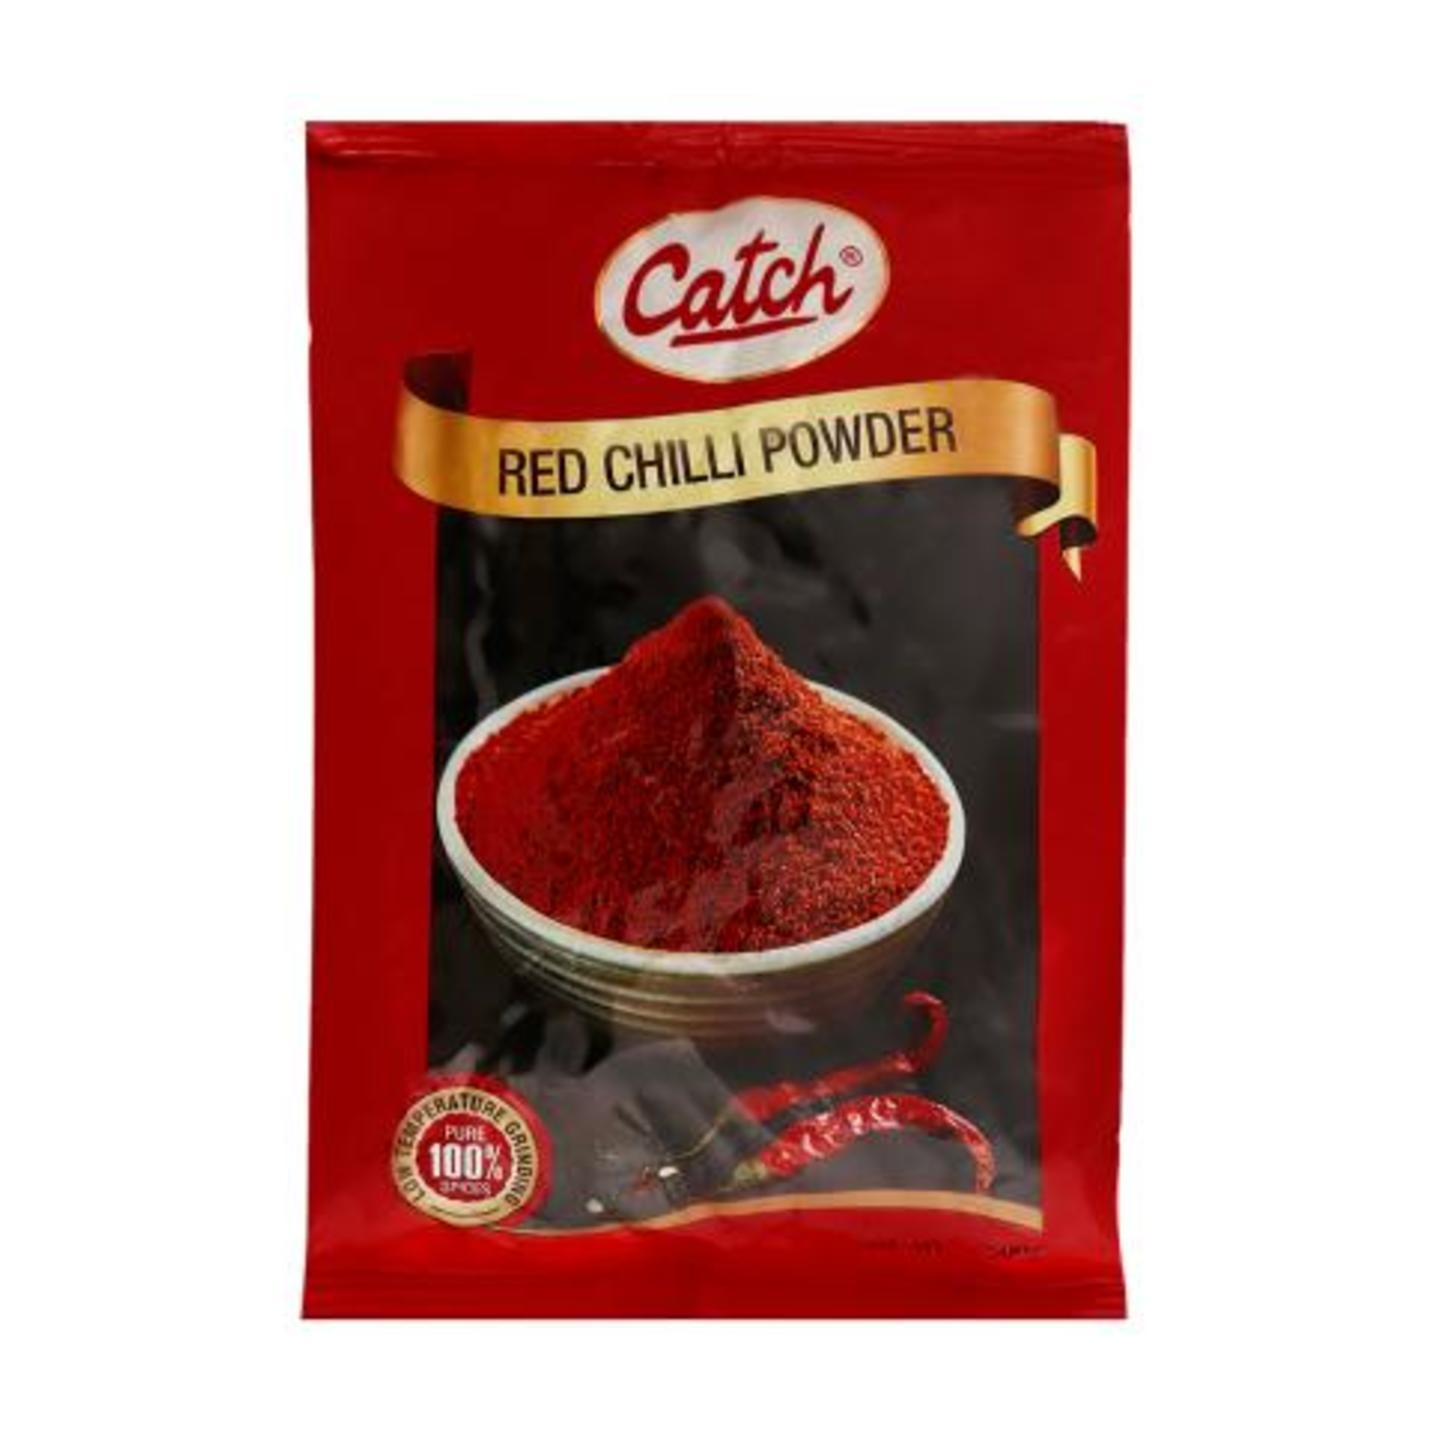 Catch Red Chilli Powder 500 g PMBM 0.905108.6